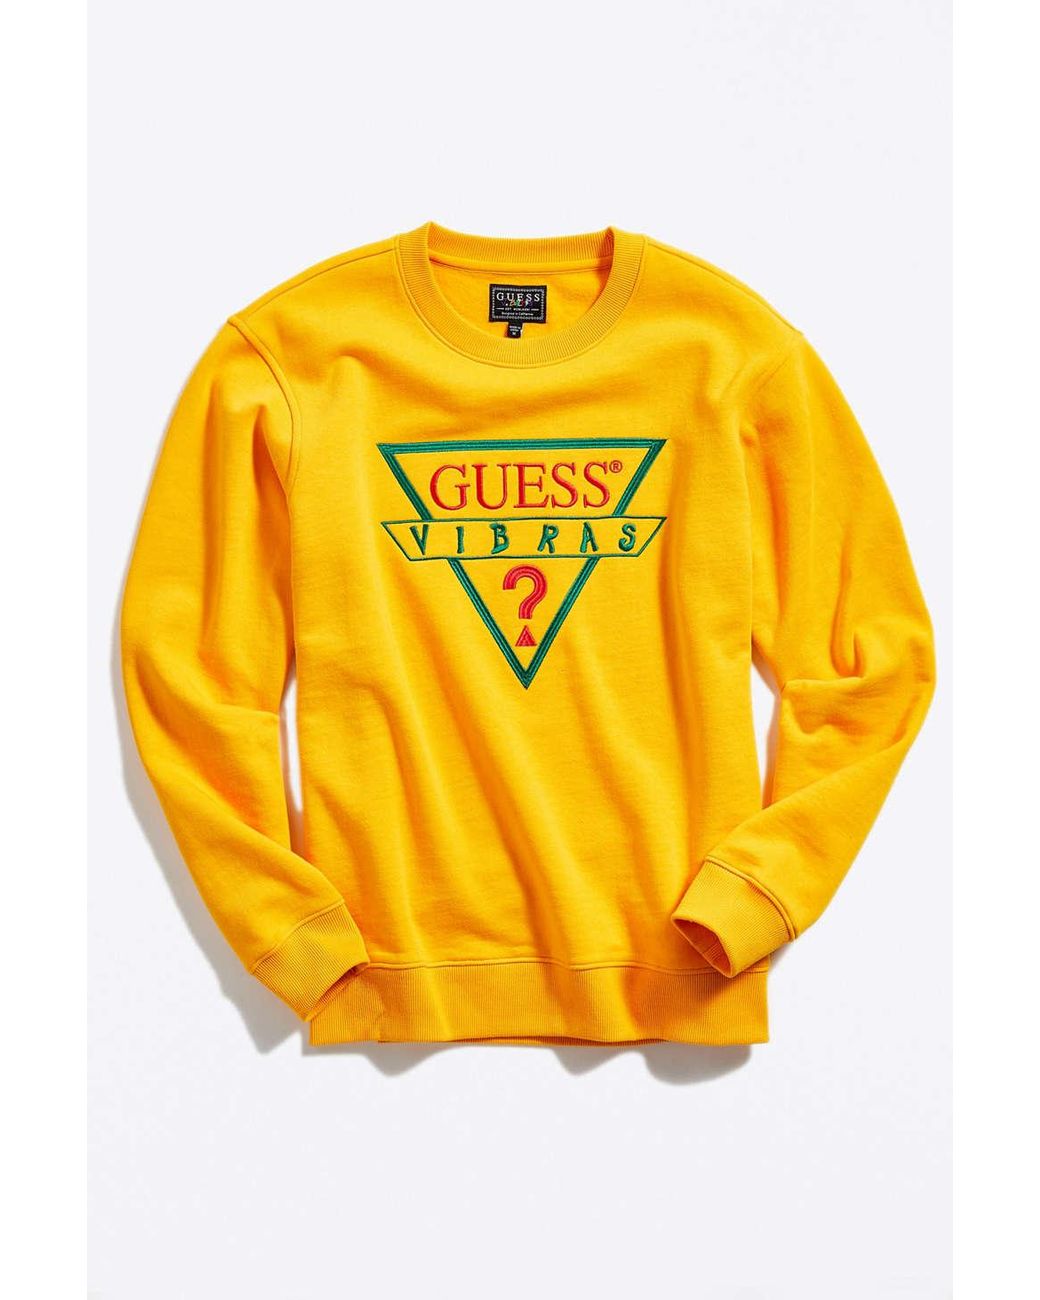 Guess Guess J Balvin Vibras Crew Neck Sweatshirt Yellow for Men | Lyst Canada